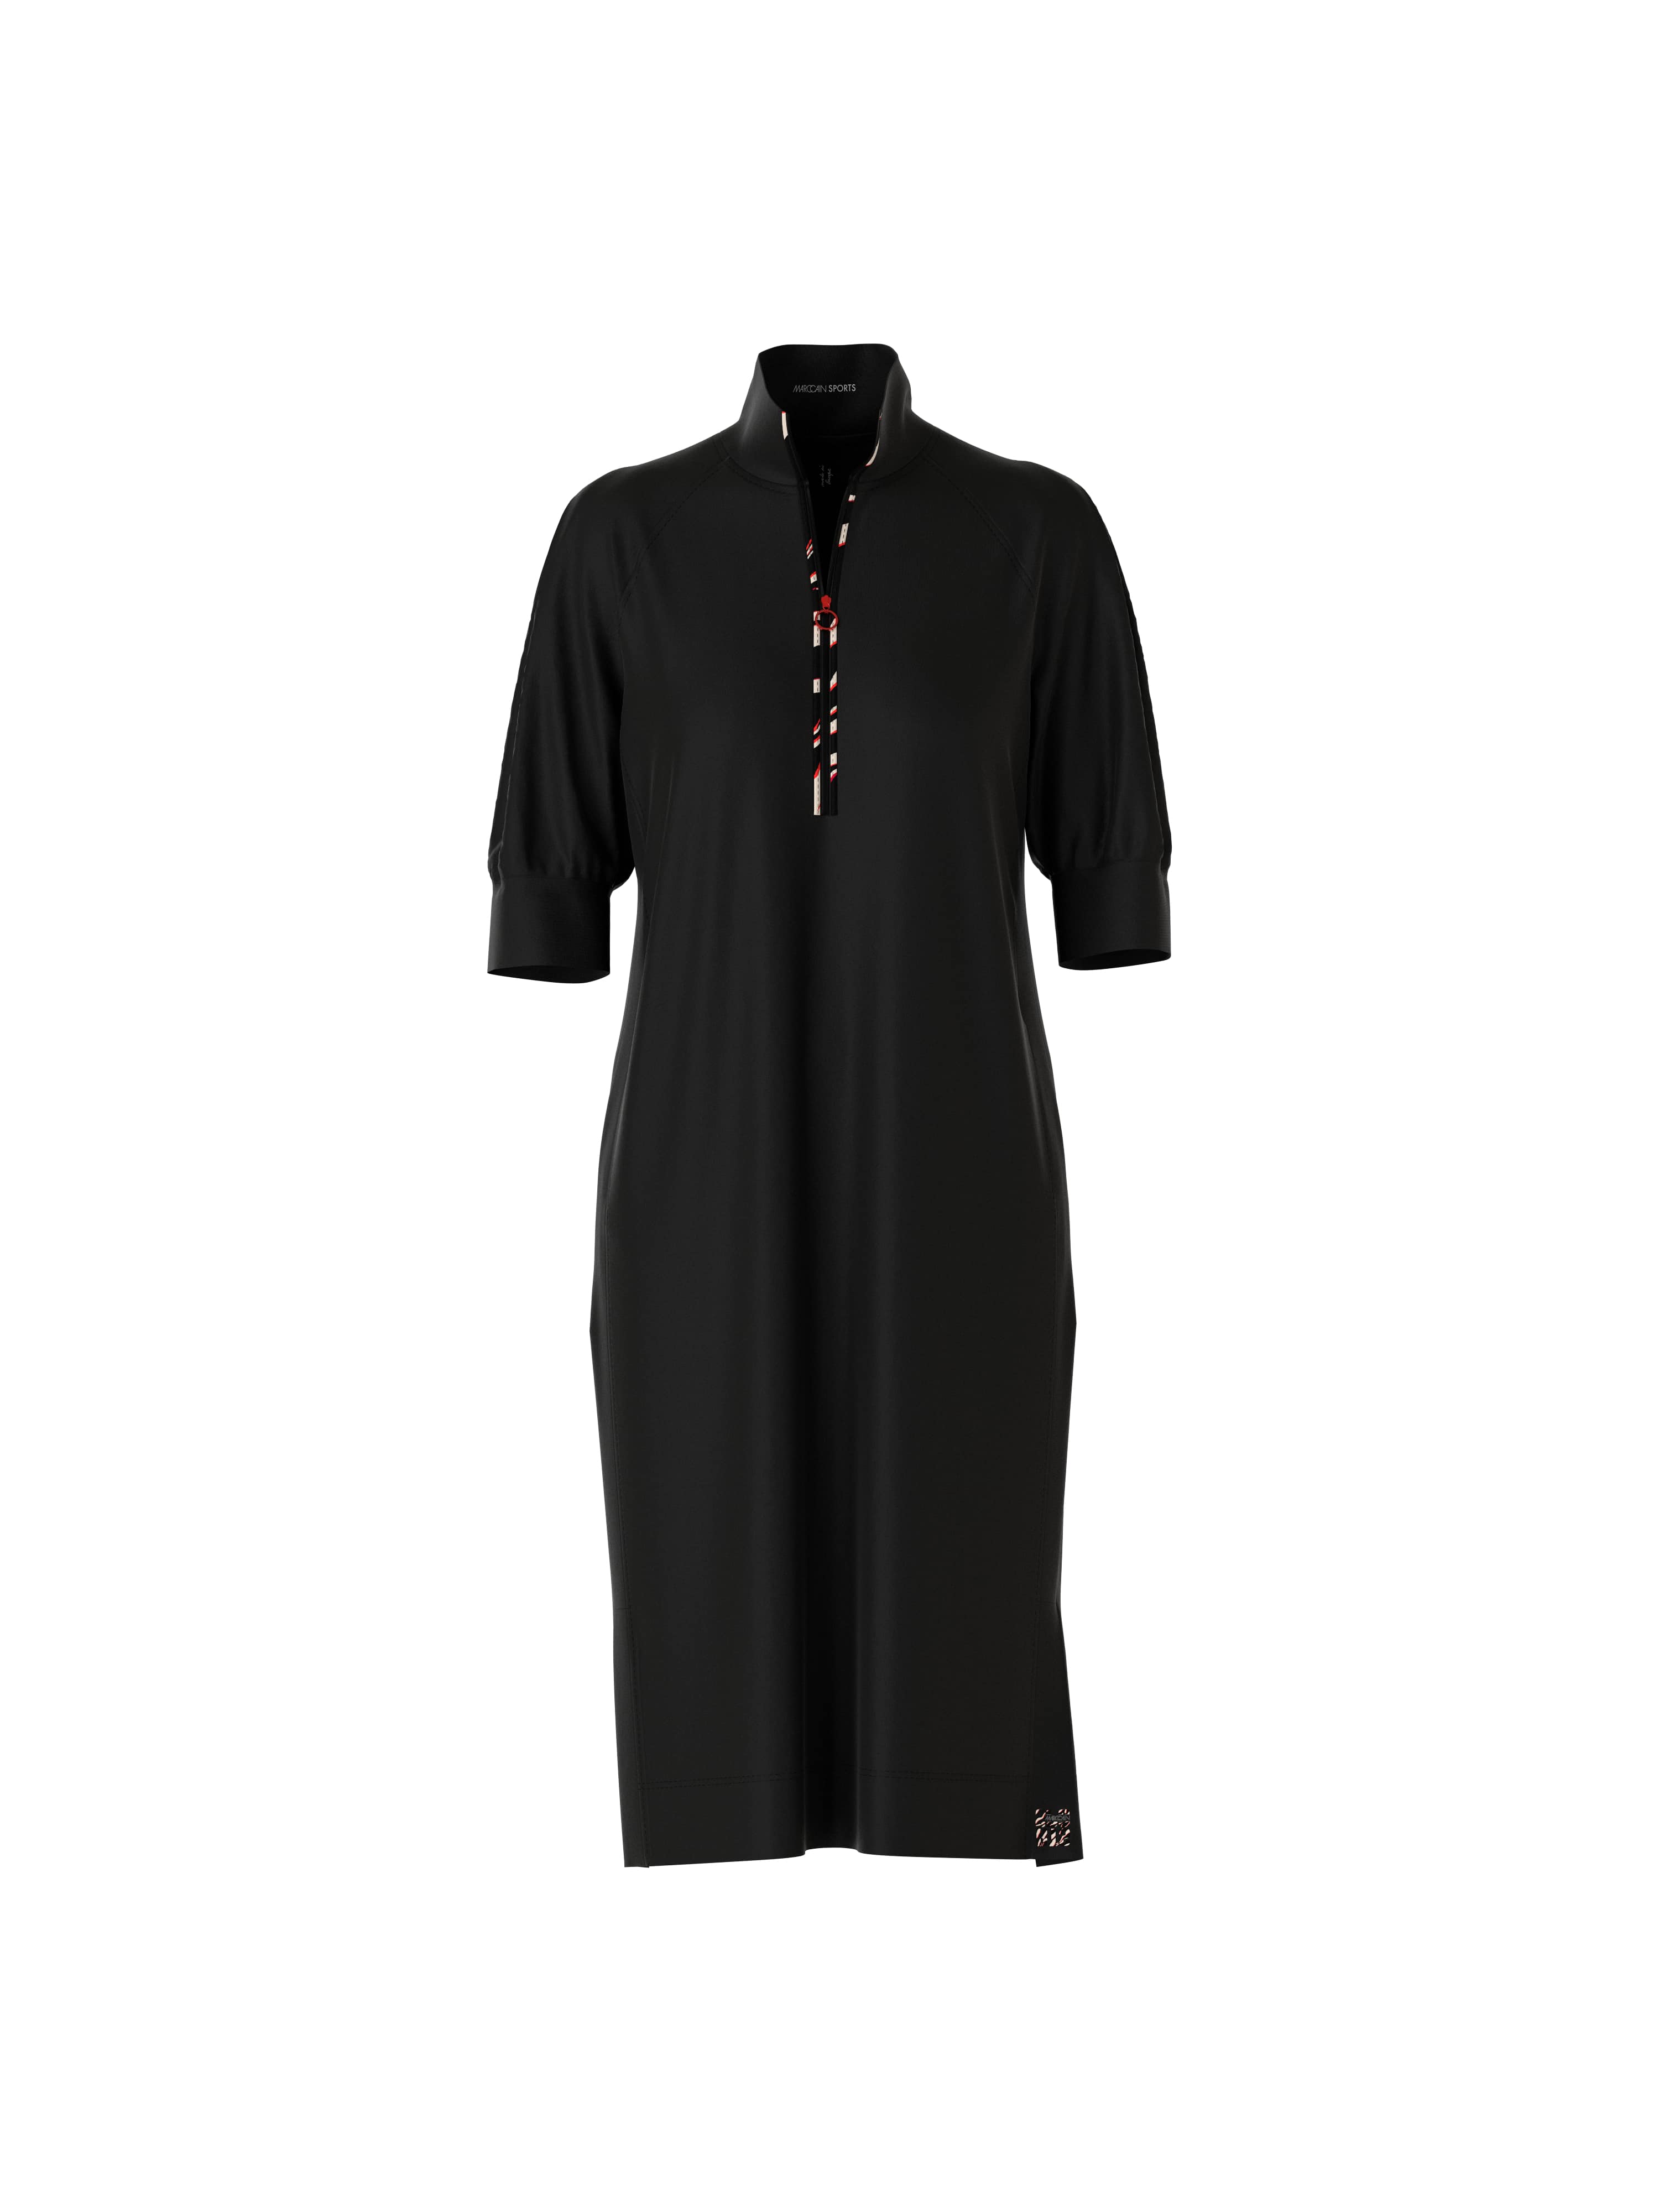 Black Stretch Jersey Zip-Up Polo Dress